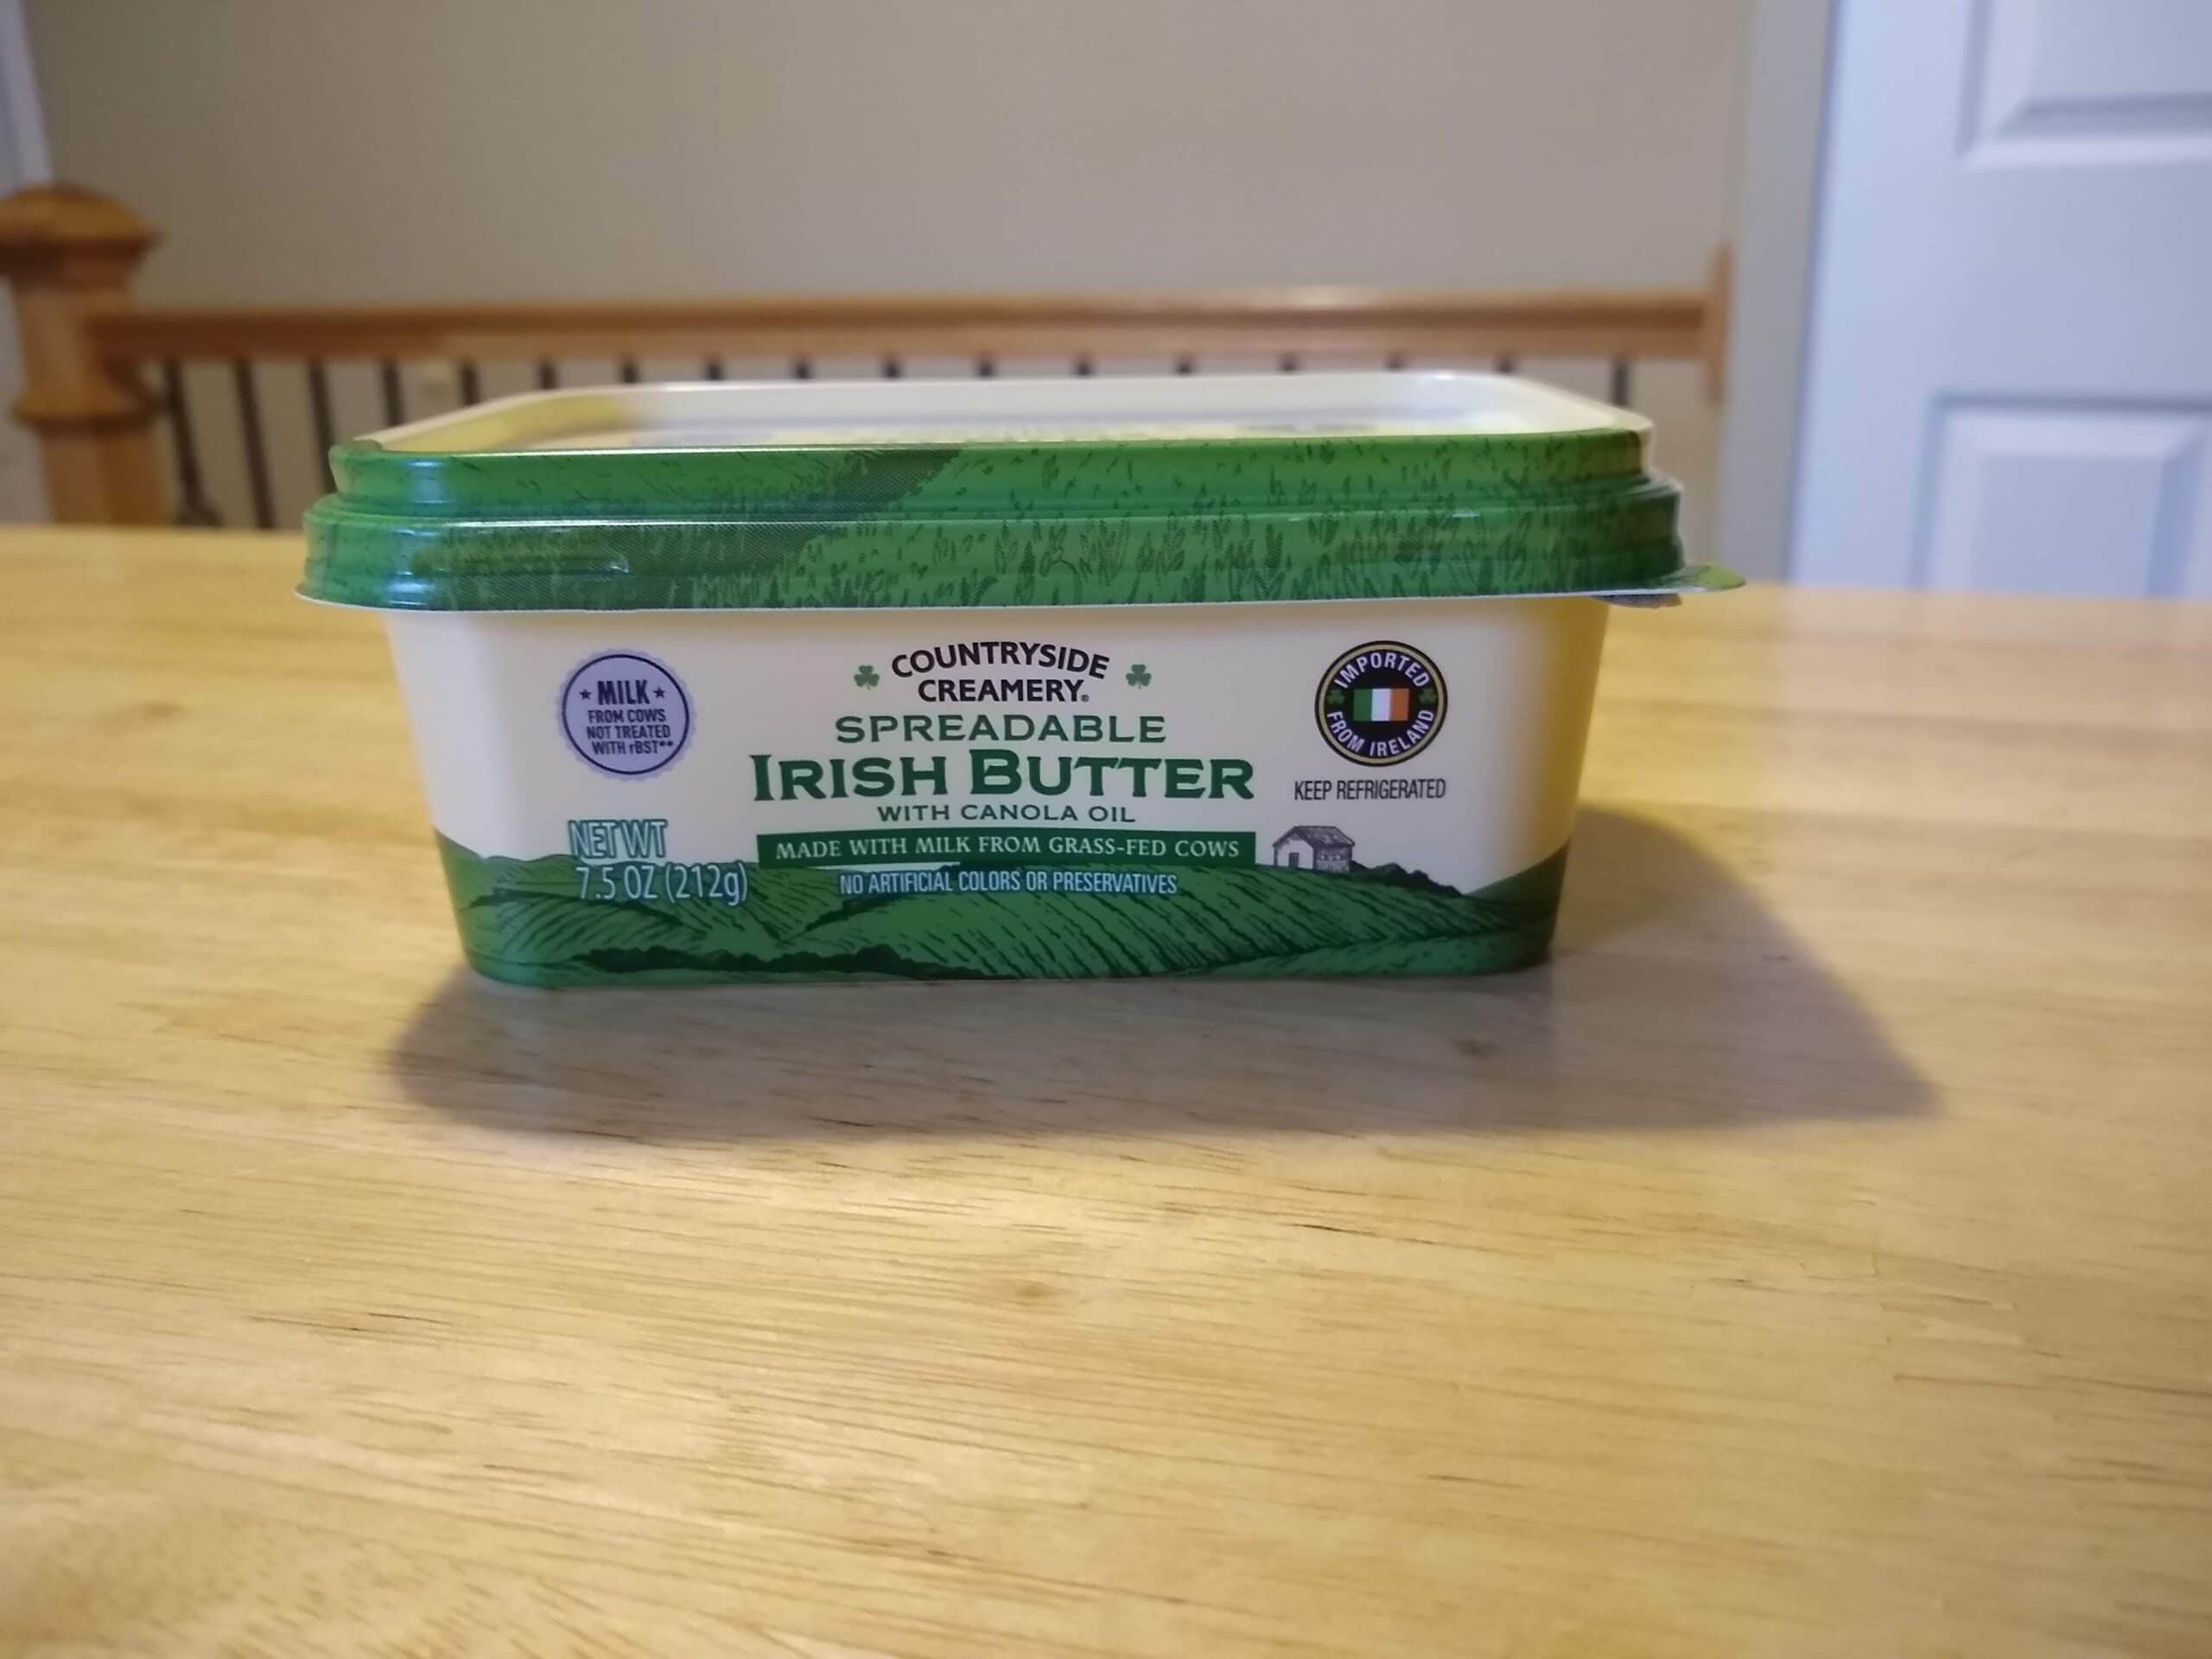 Countryside Creamery Spreadable Irish Butter